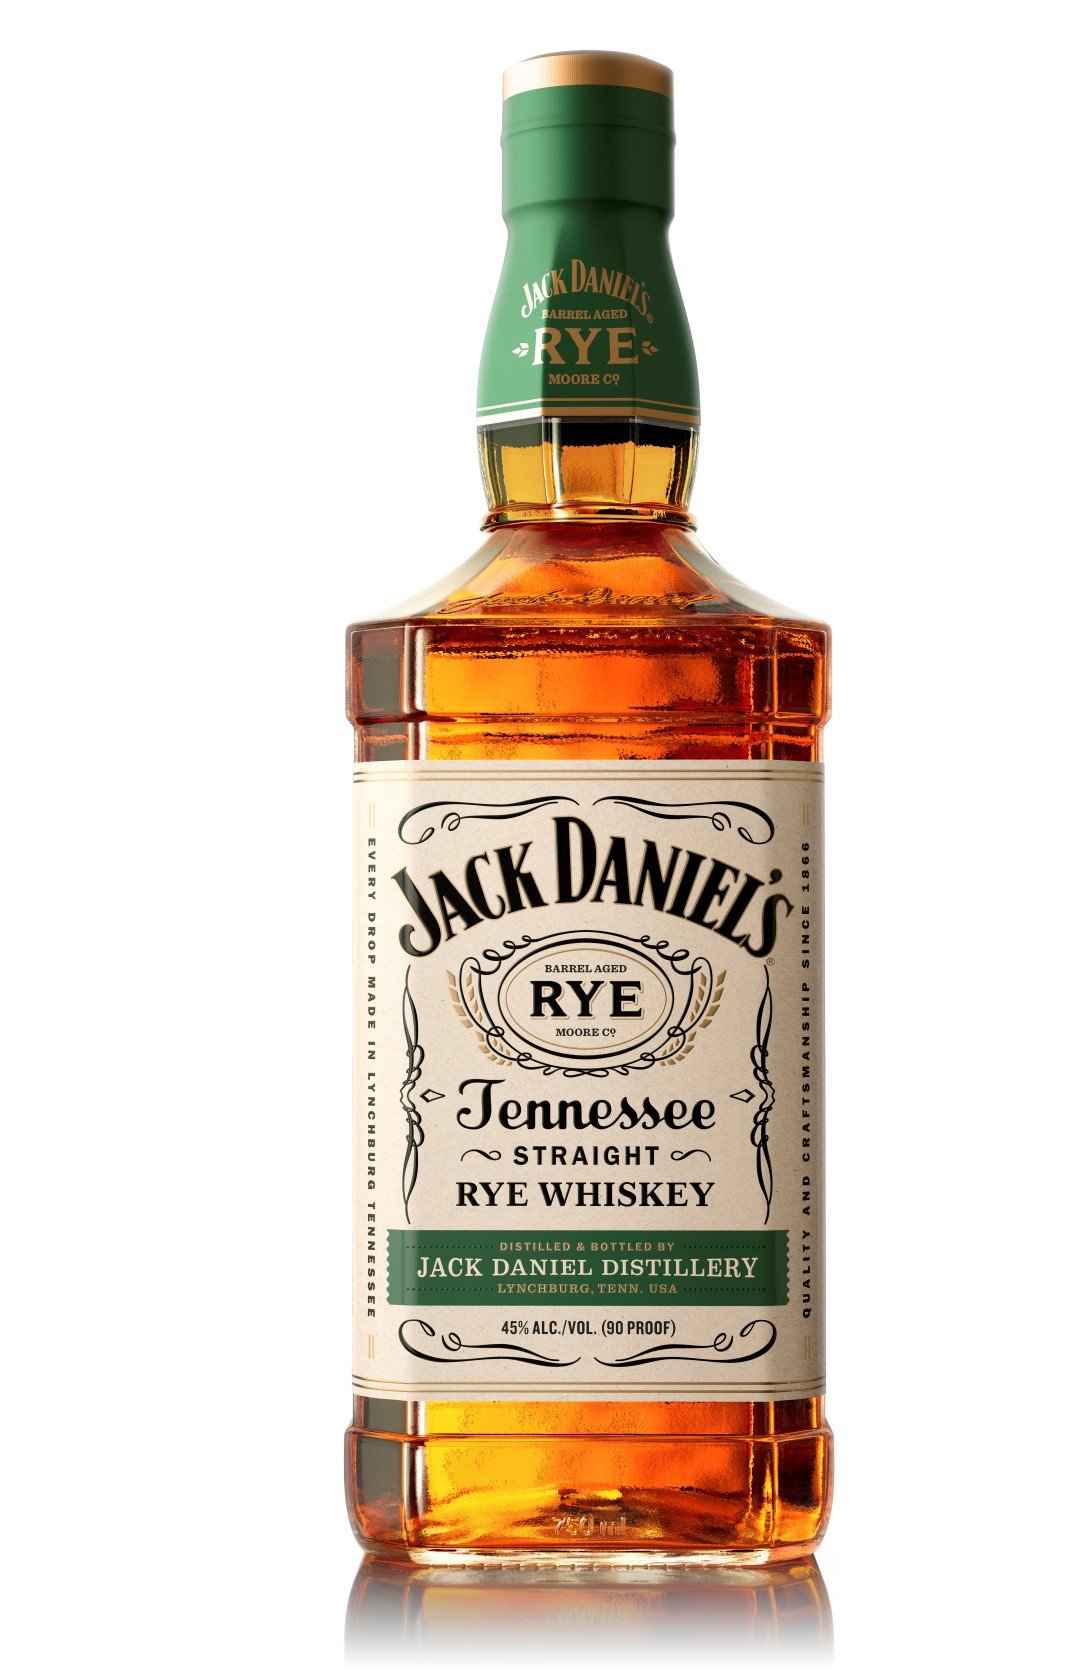 Review: Jack Daniel